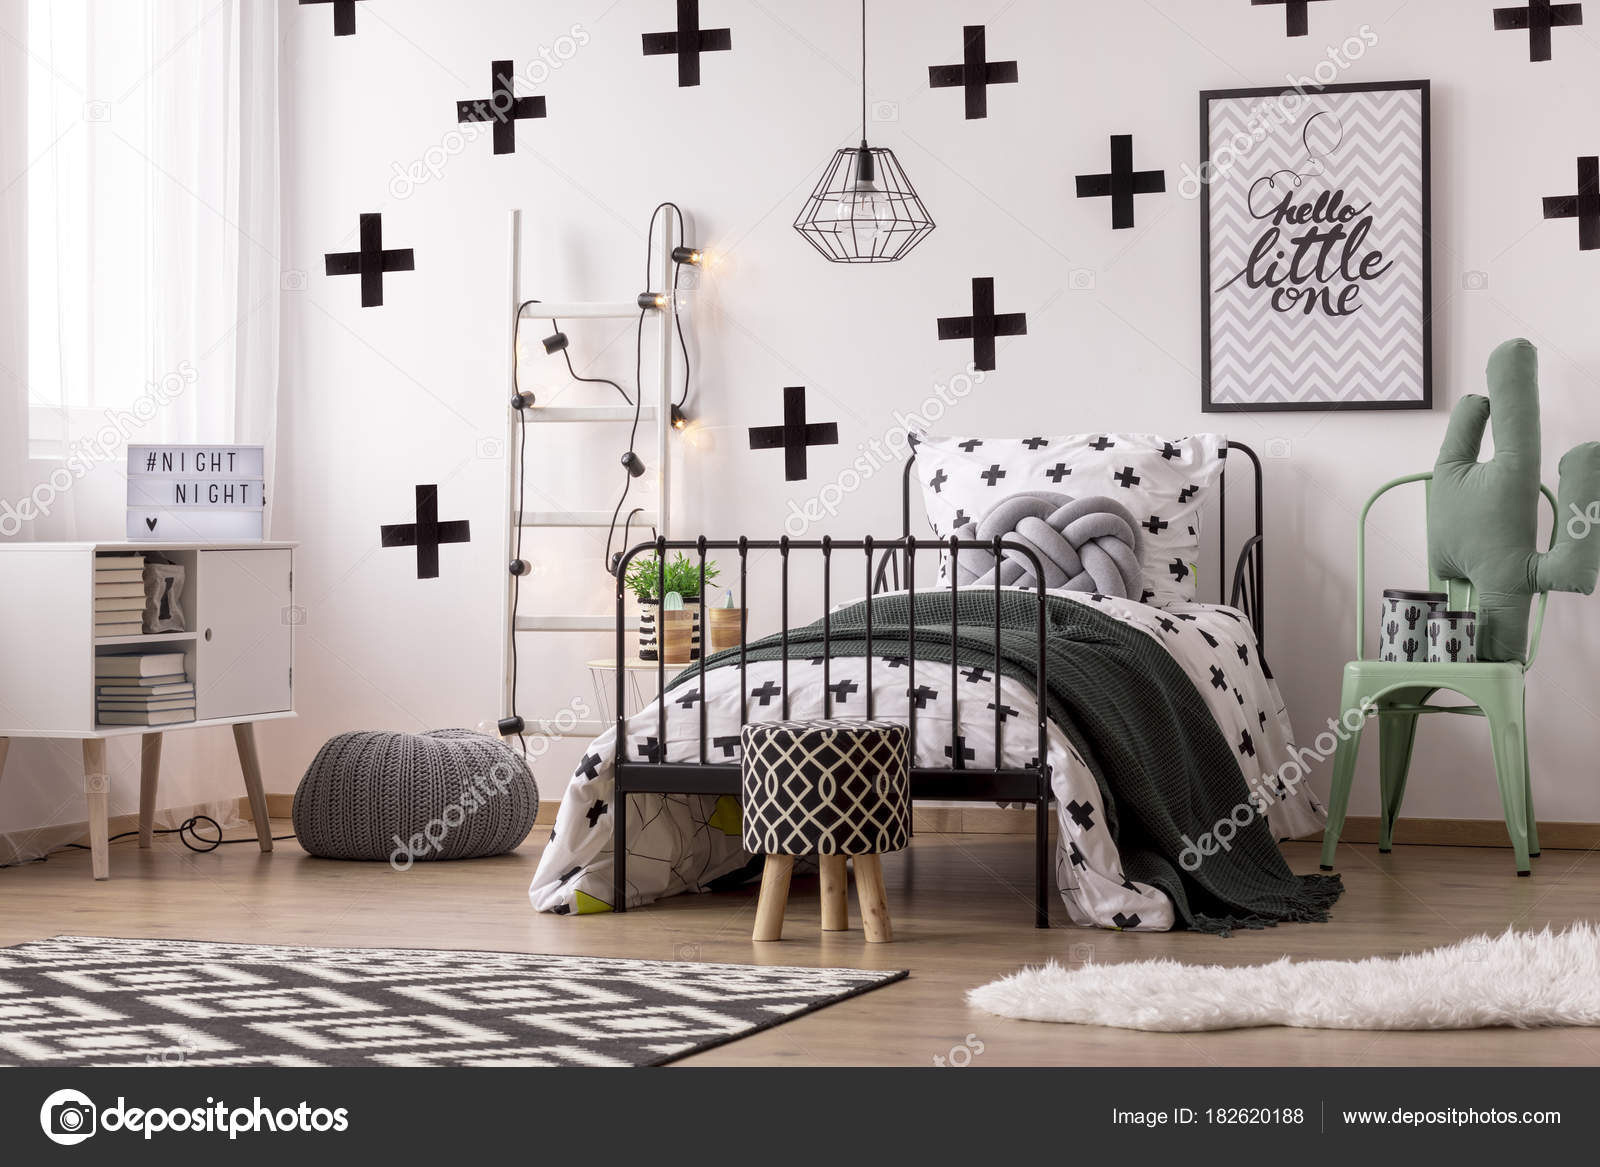 Patterned Wallpaper In Kid S Bedroom Stock Photo